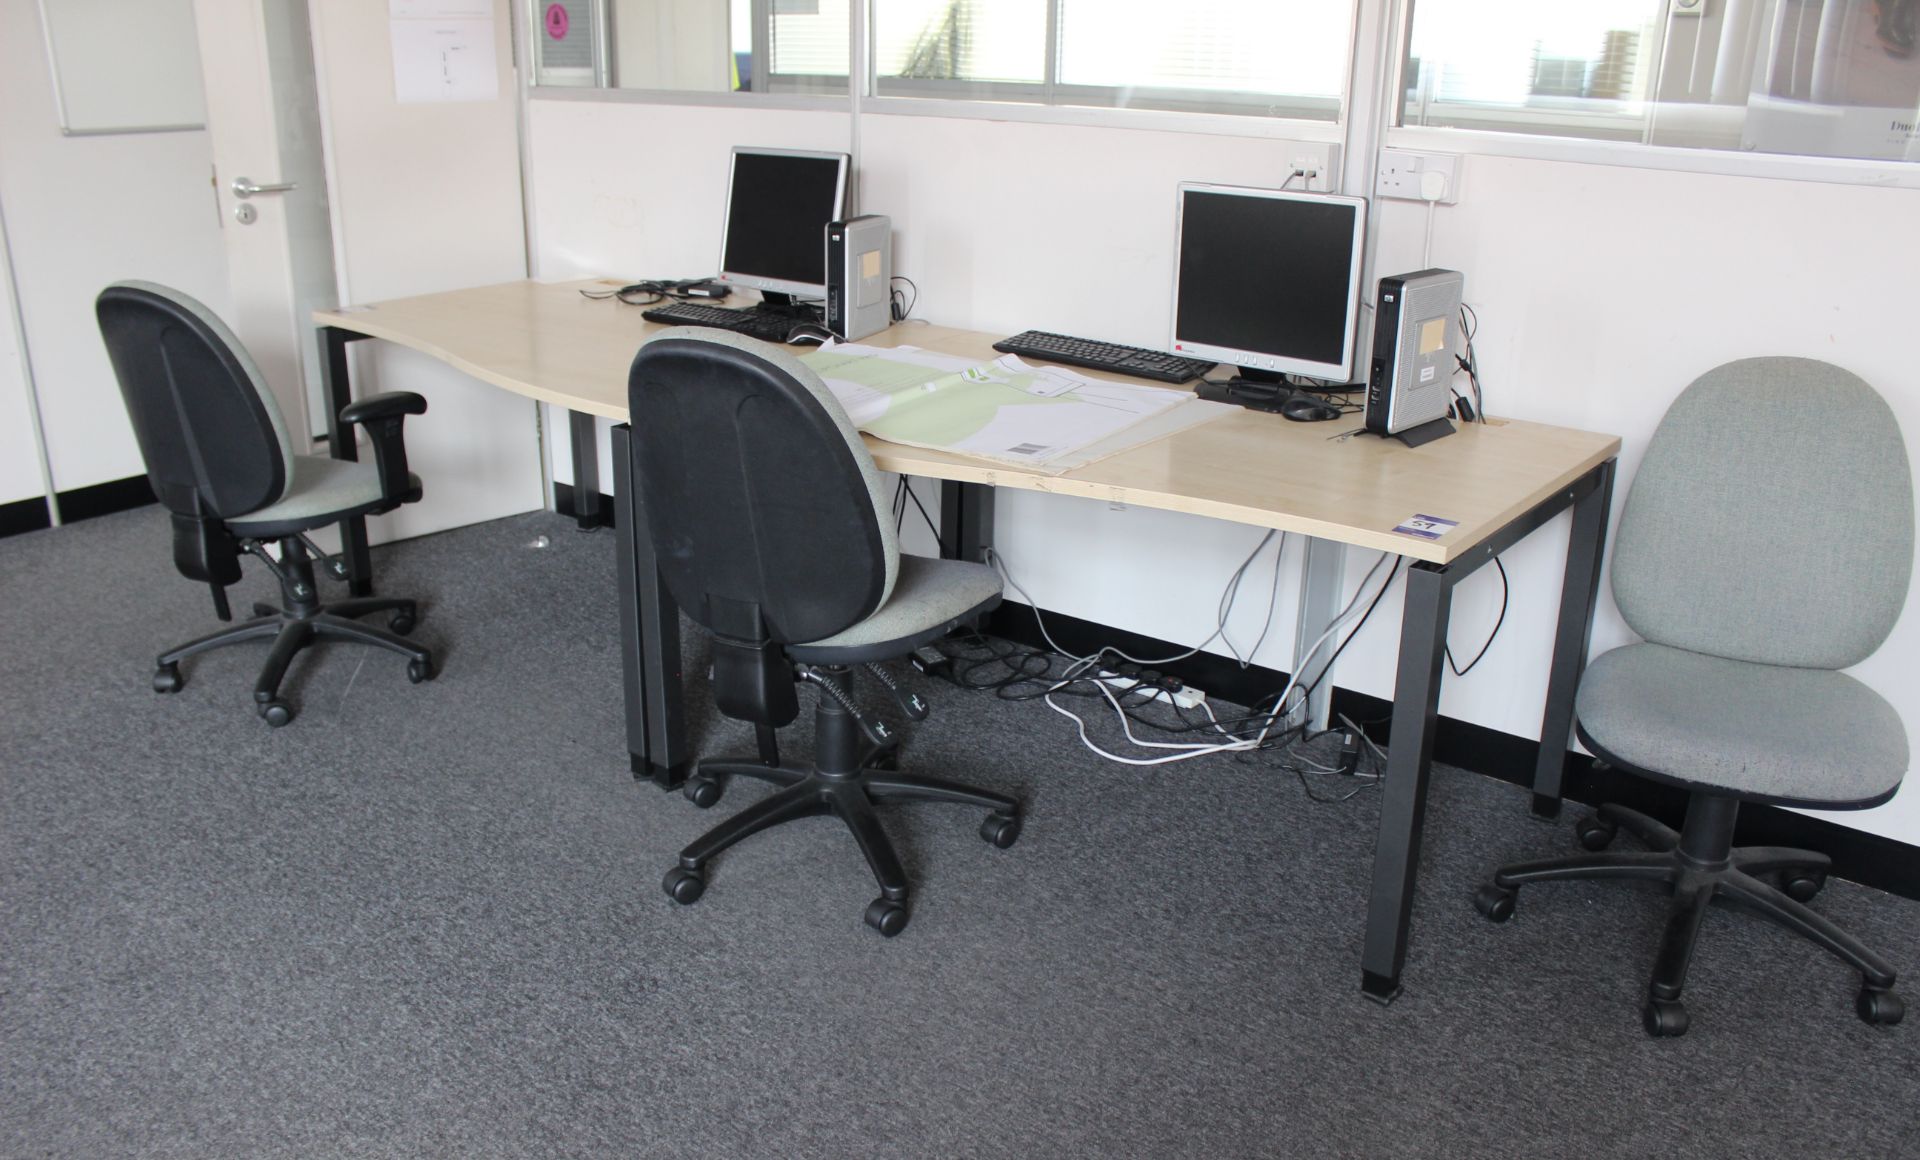 2 light oak effect Workstations, Office Chairs and Iiyama Monitors